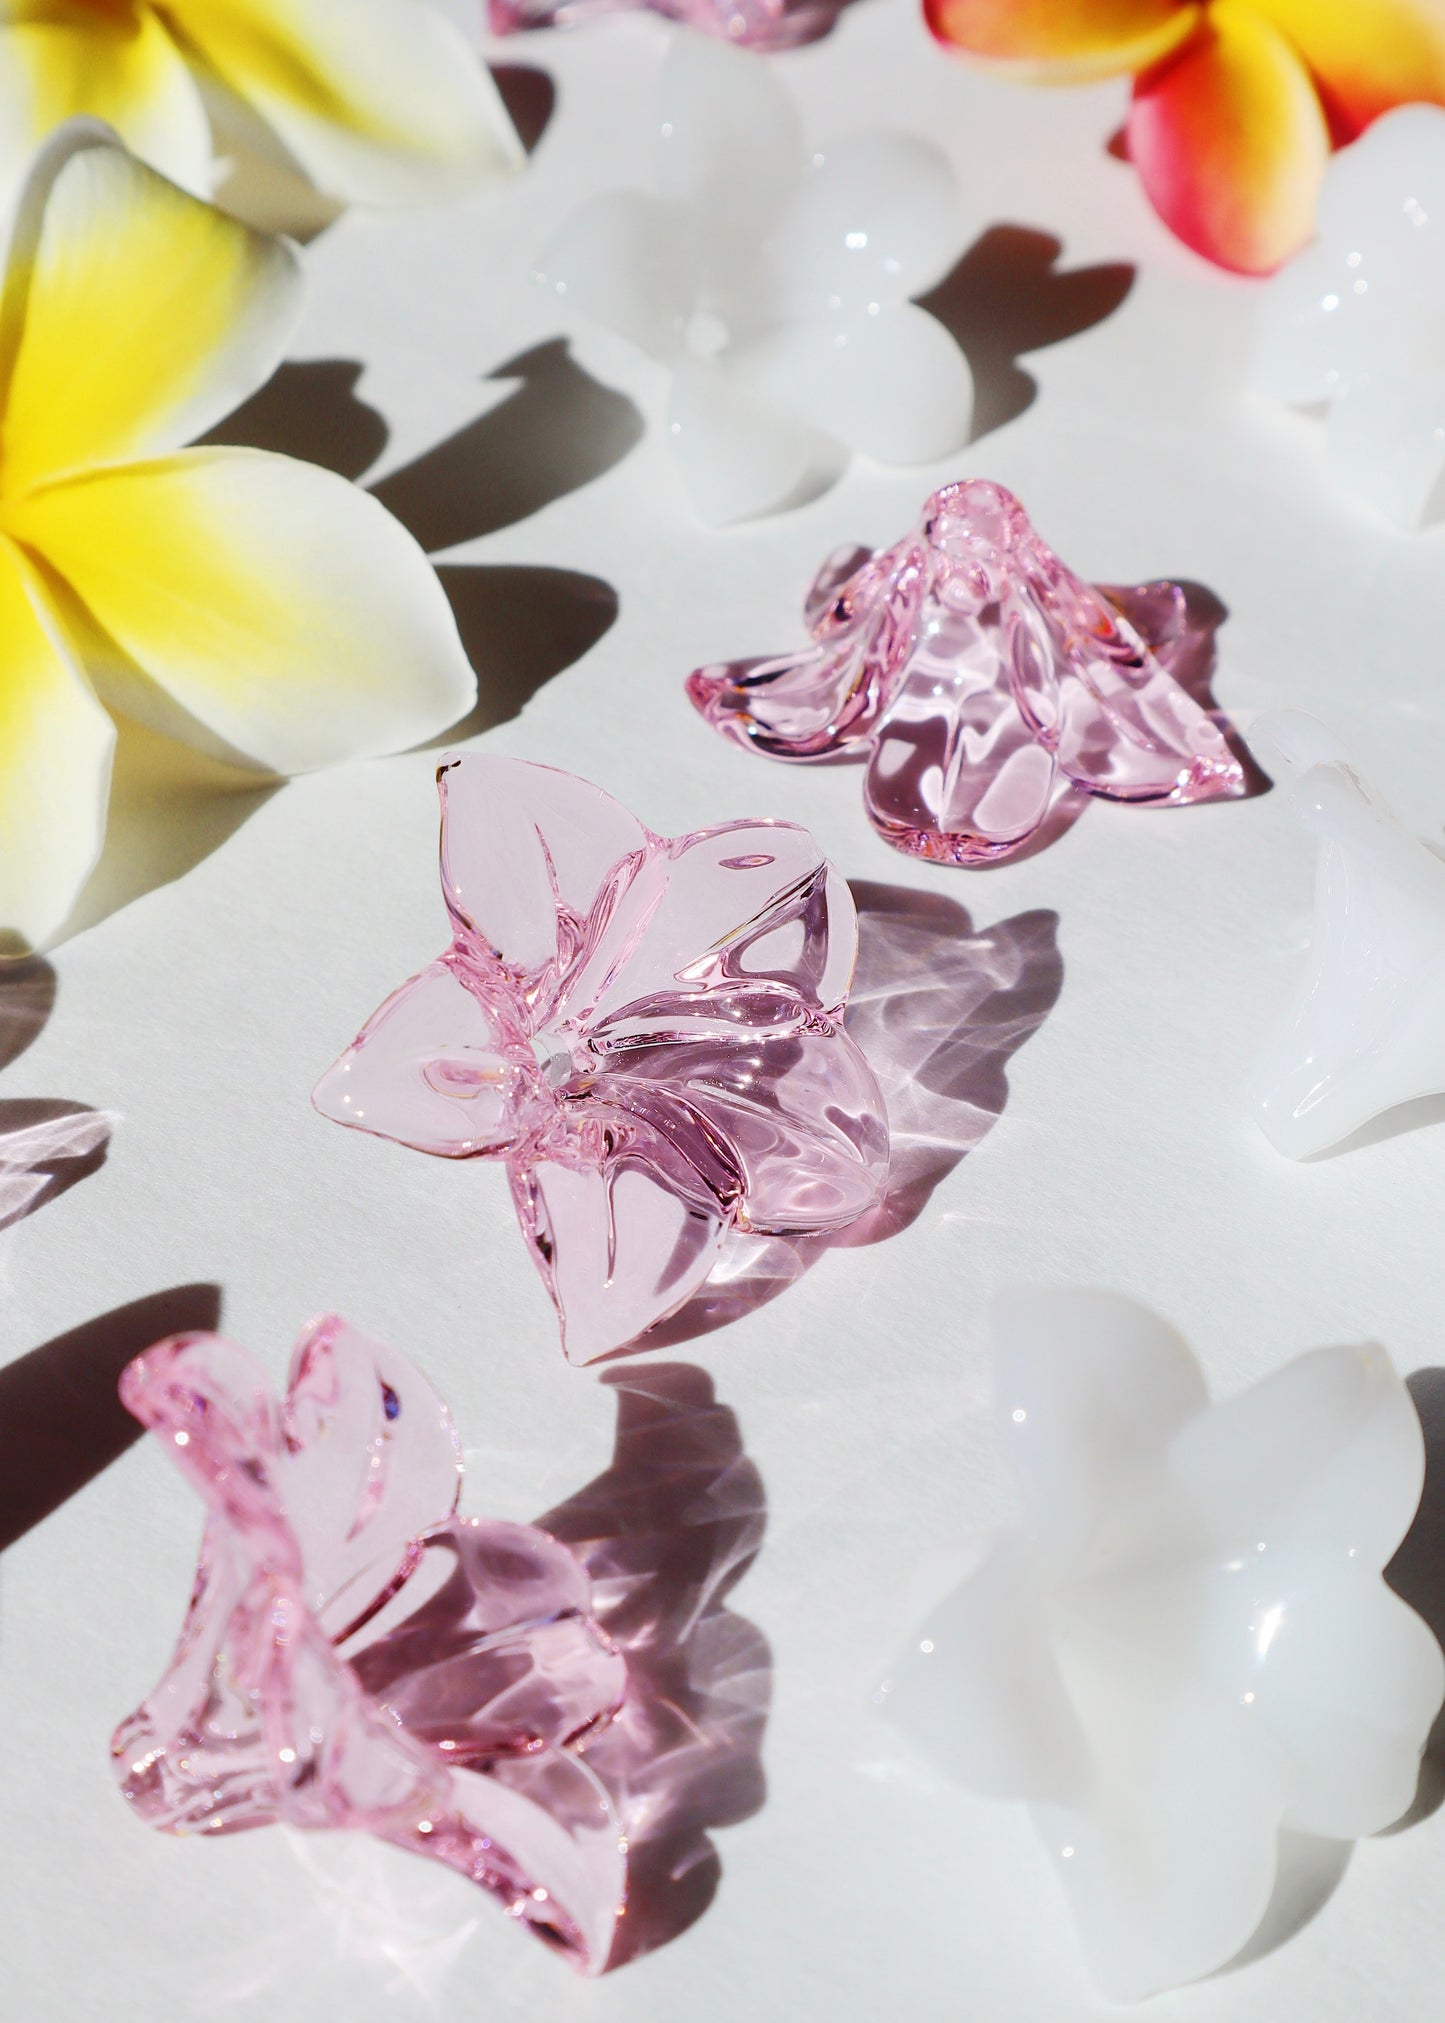 Single Pua Melia Plumeria Flowers - Translucent Pink & Milky White